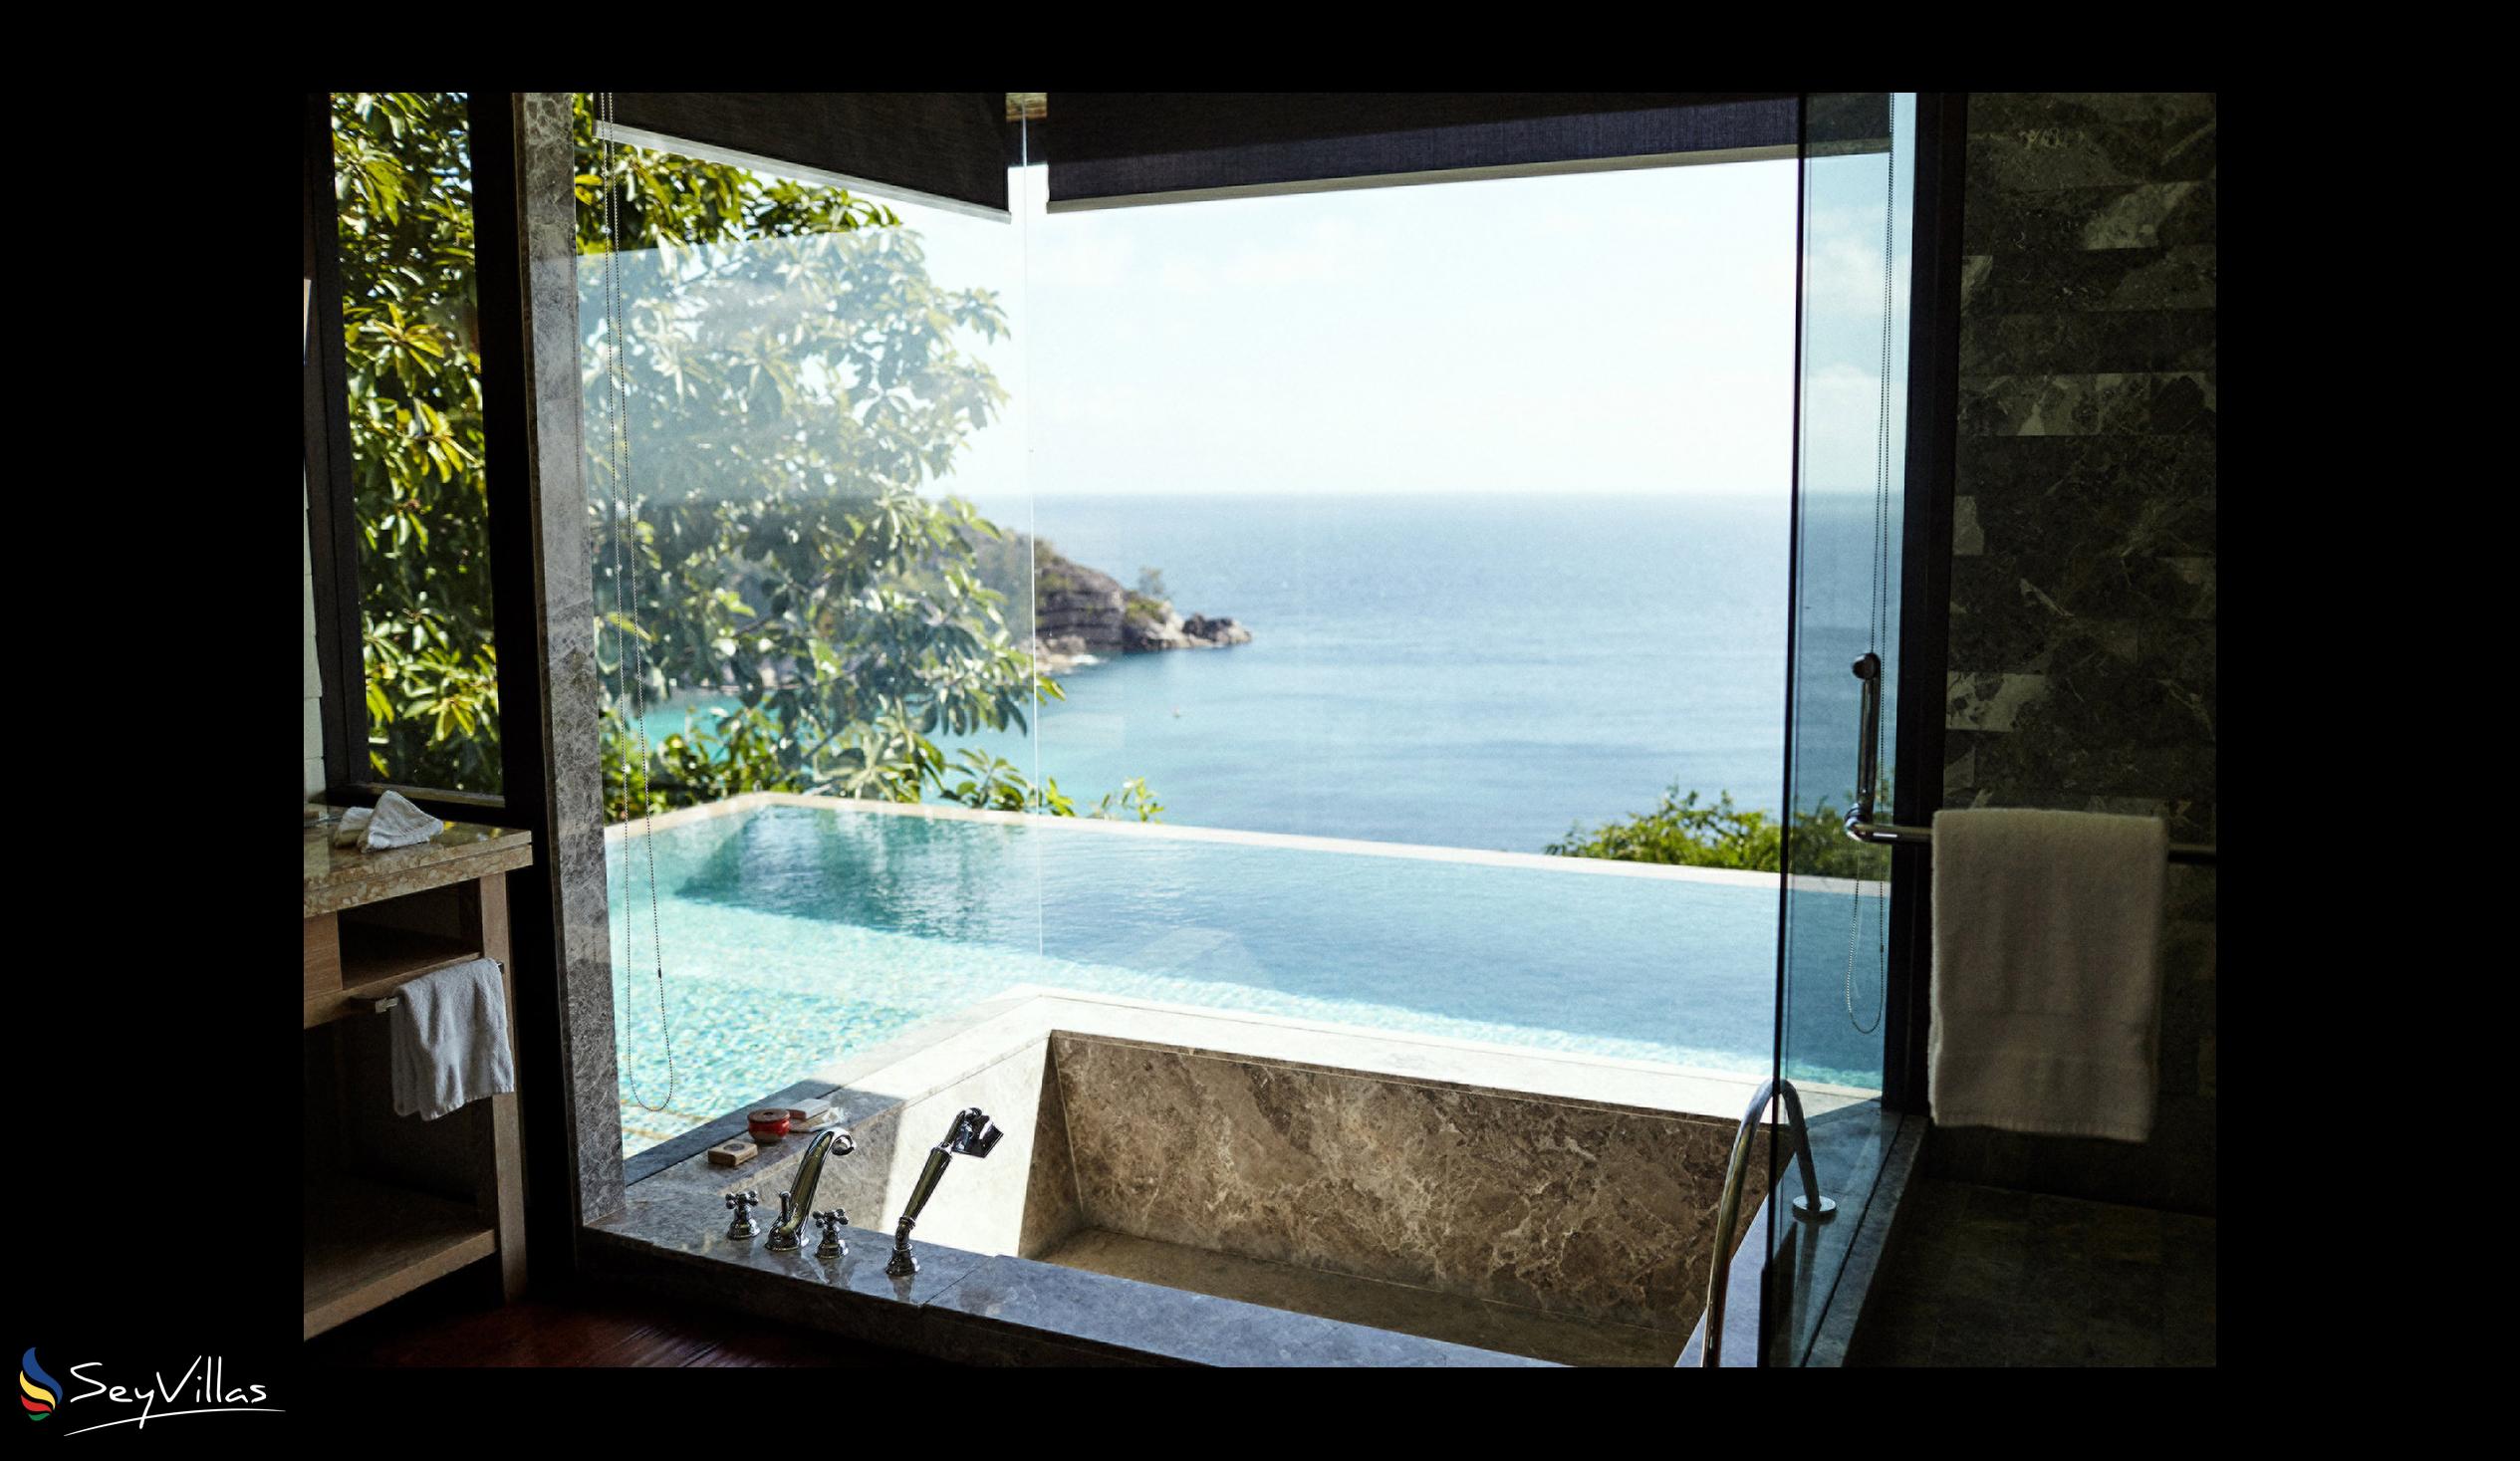 Photo 32: Four Seasons Resort - Ocean View Villa - Mahé (Seychelles)